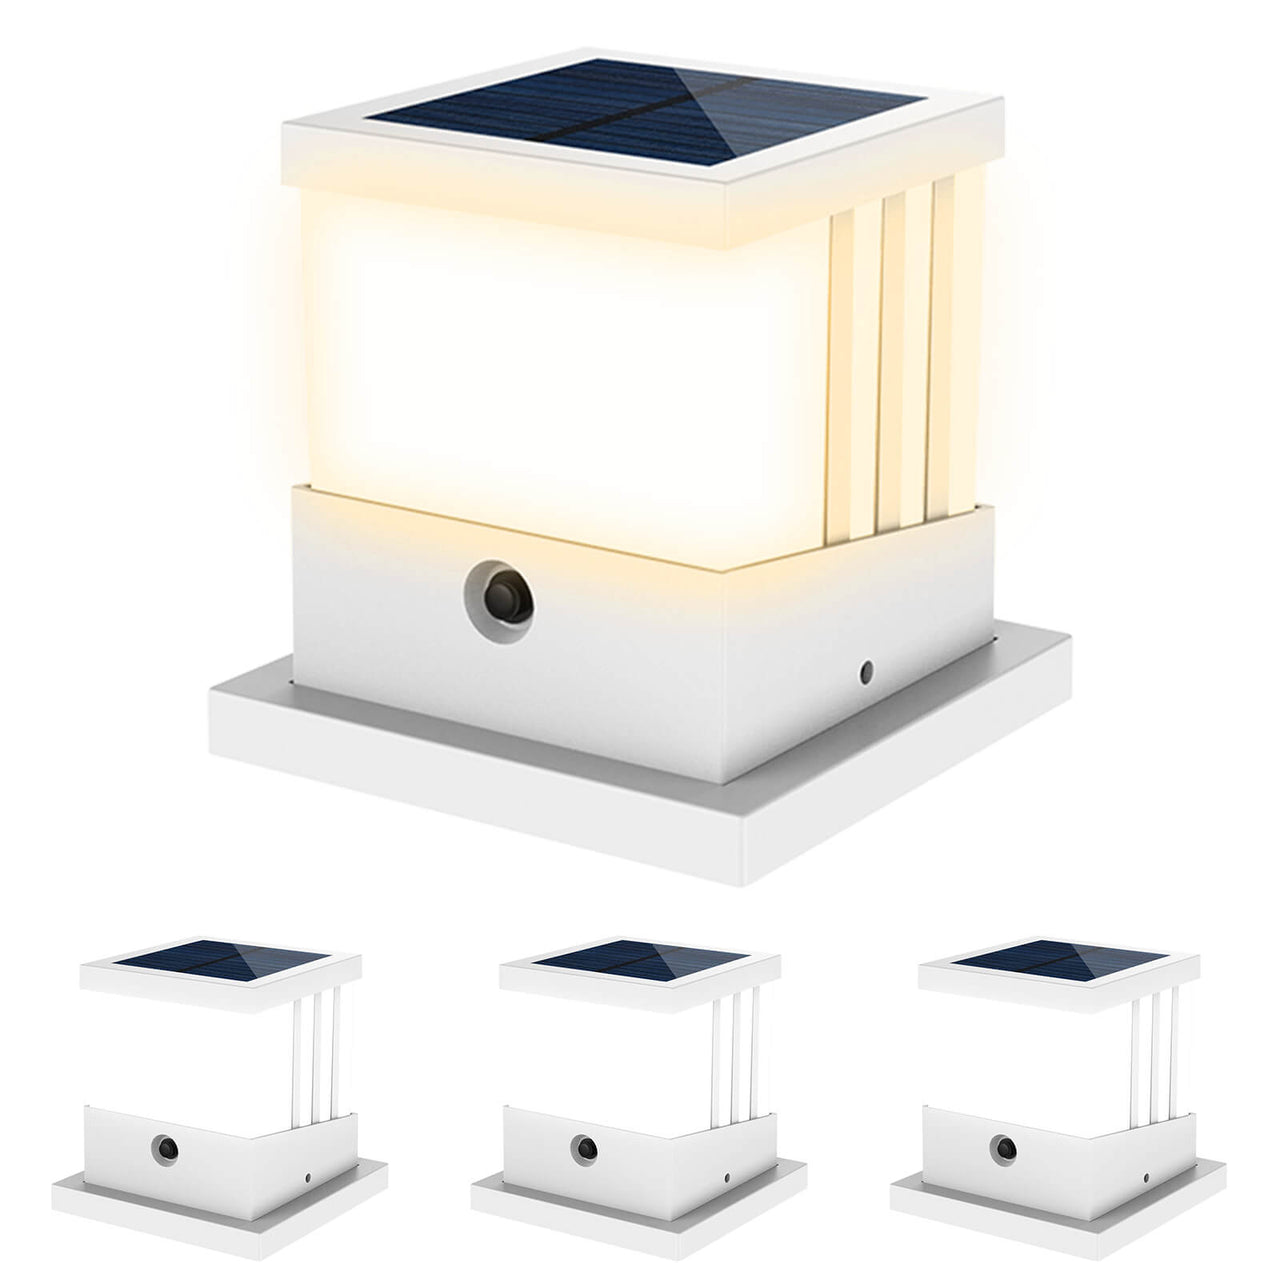 TSUN White Shell Solar Post Cap Lights 4x4 5x5